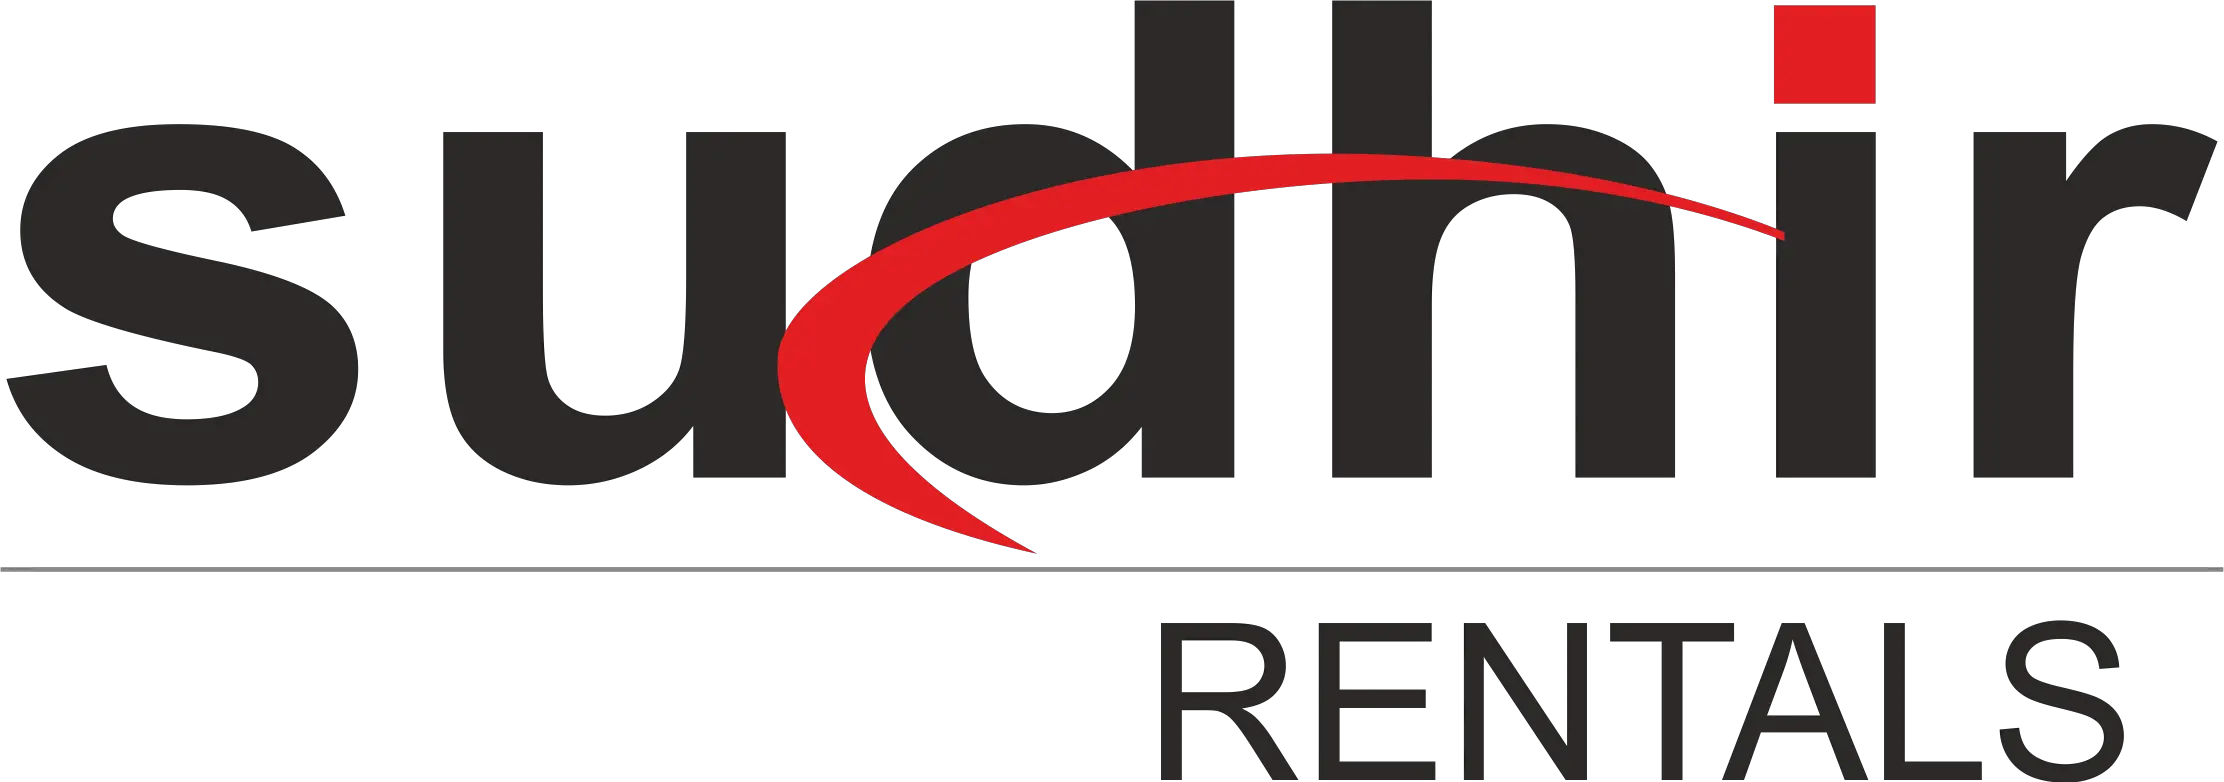 Sudhir Equipment Rental LLC